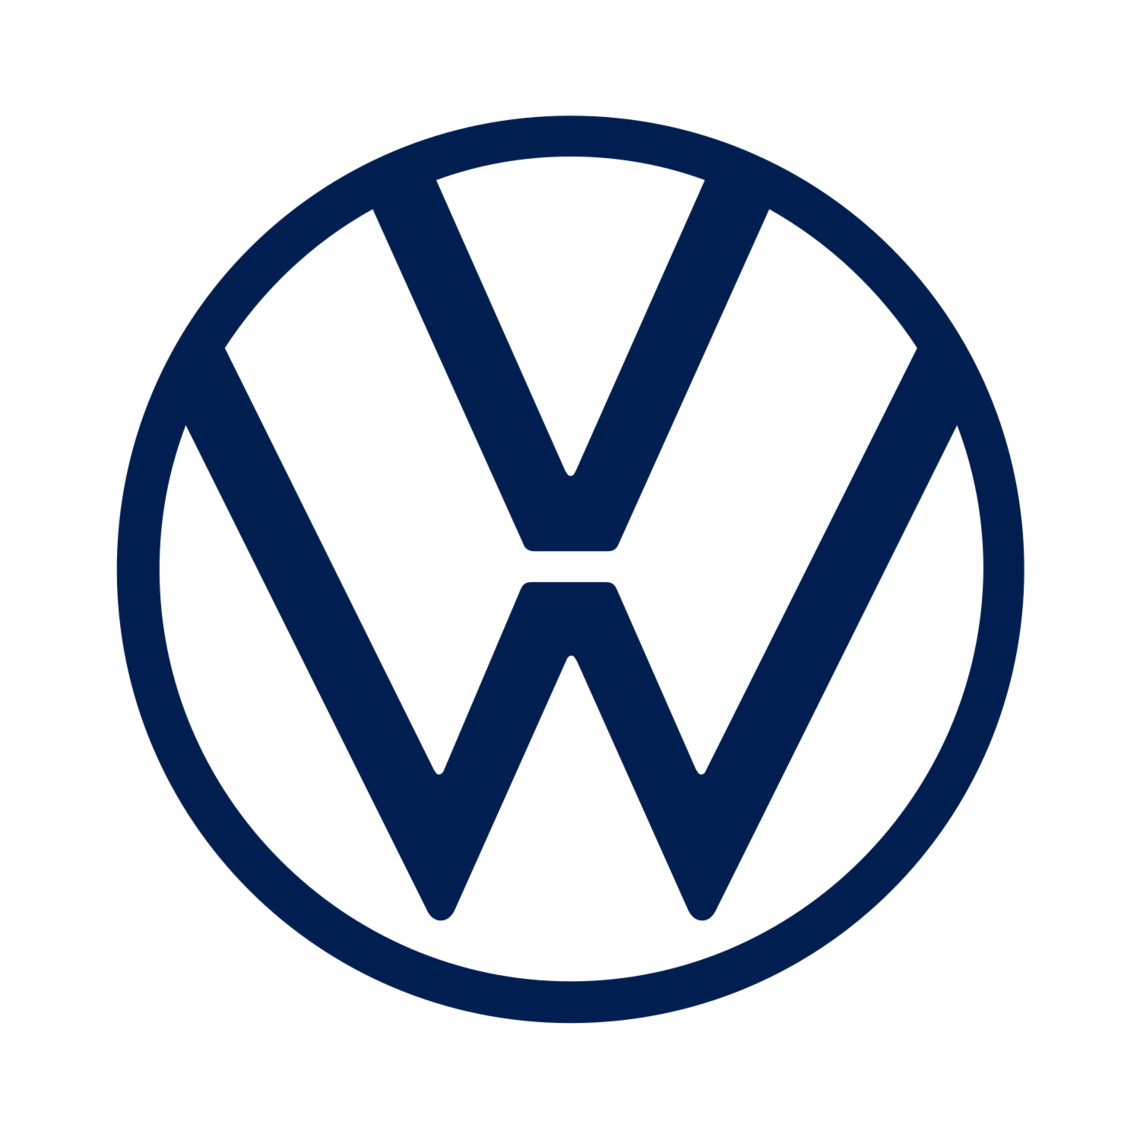 ckyk3xhmy00xxfre7ds91yjsq volkswagen logo 2019 1500x1500 full